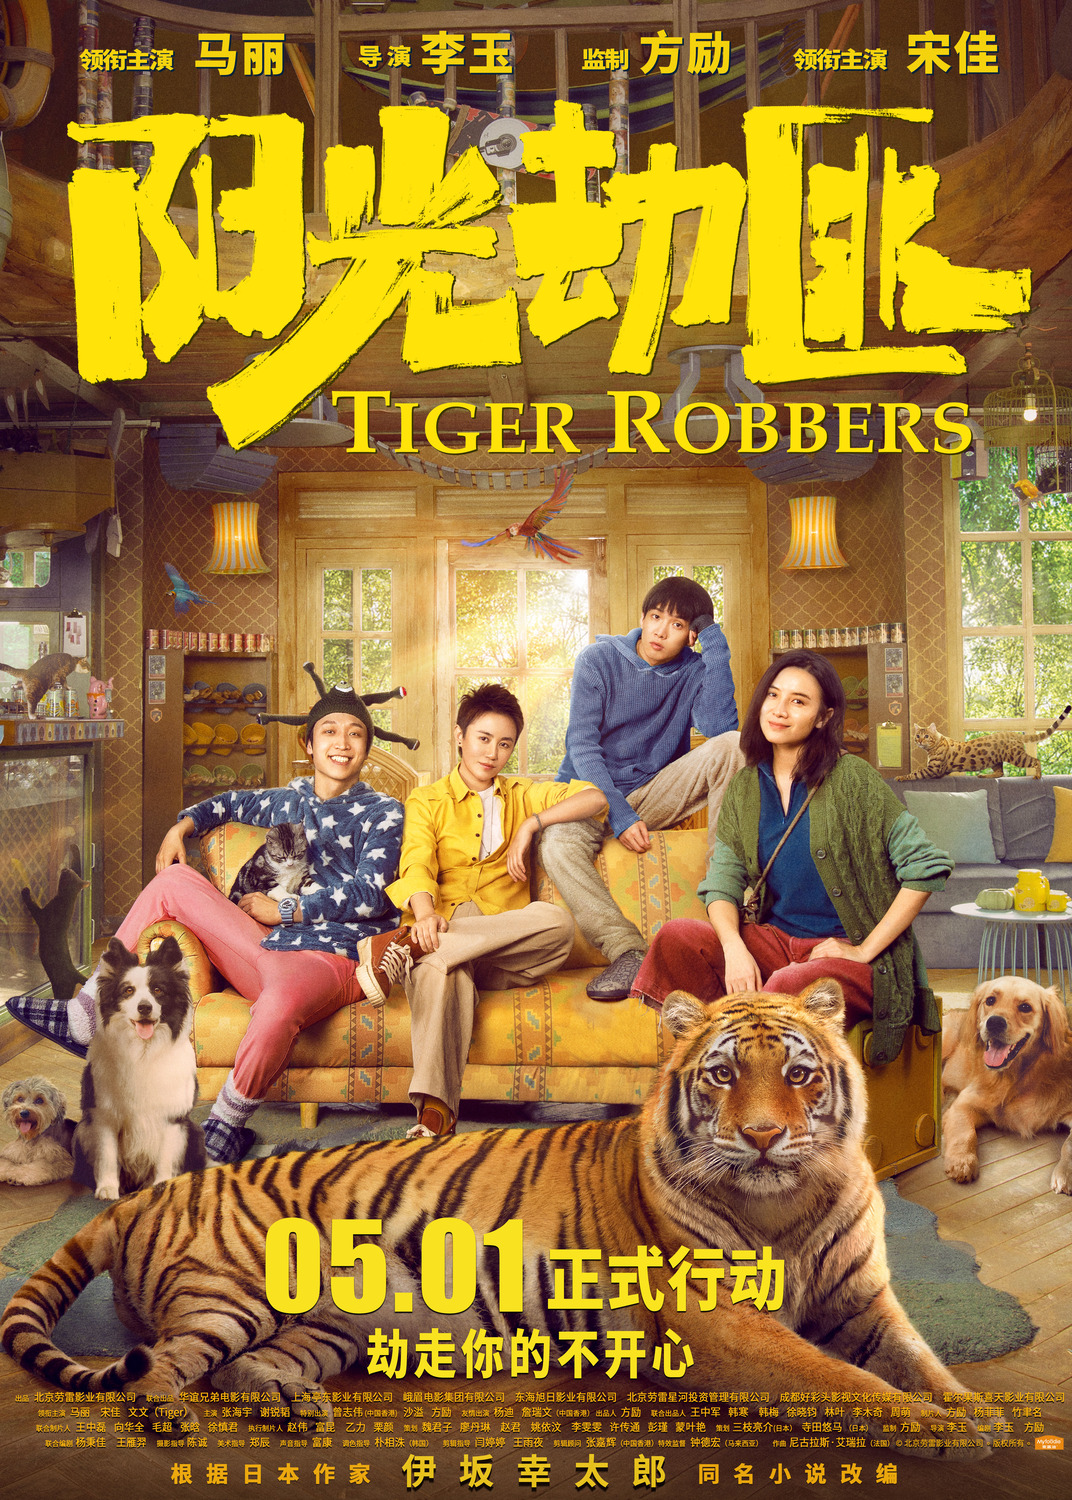 Extra Large Movie Poster Image for Yang Guang Bu Shi Jie Fei (#3 of 3)